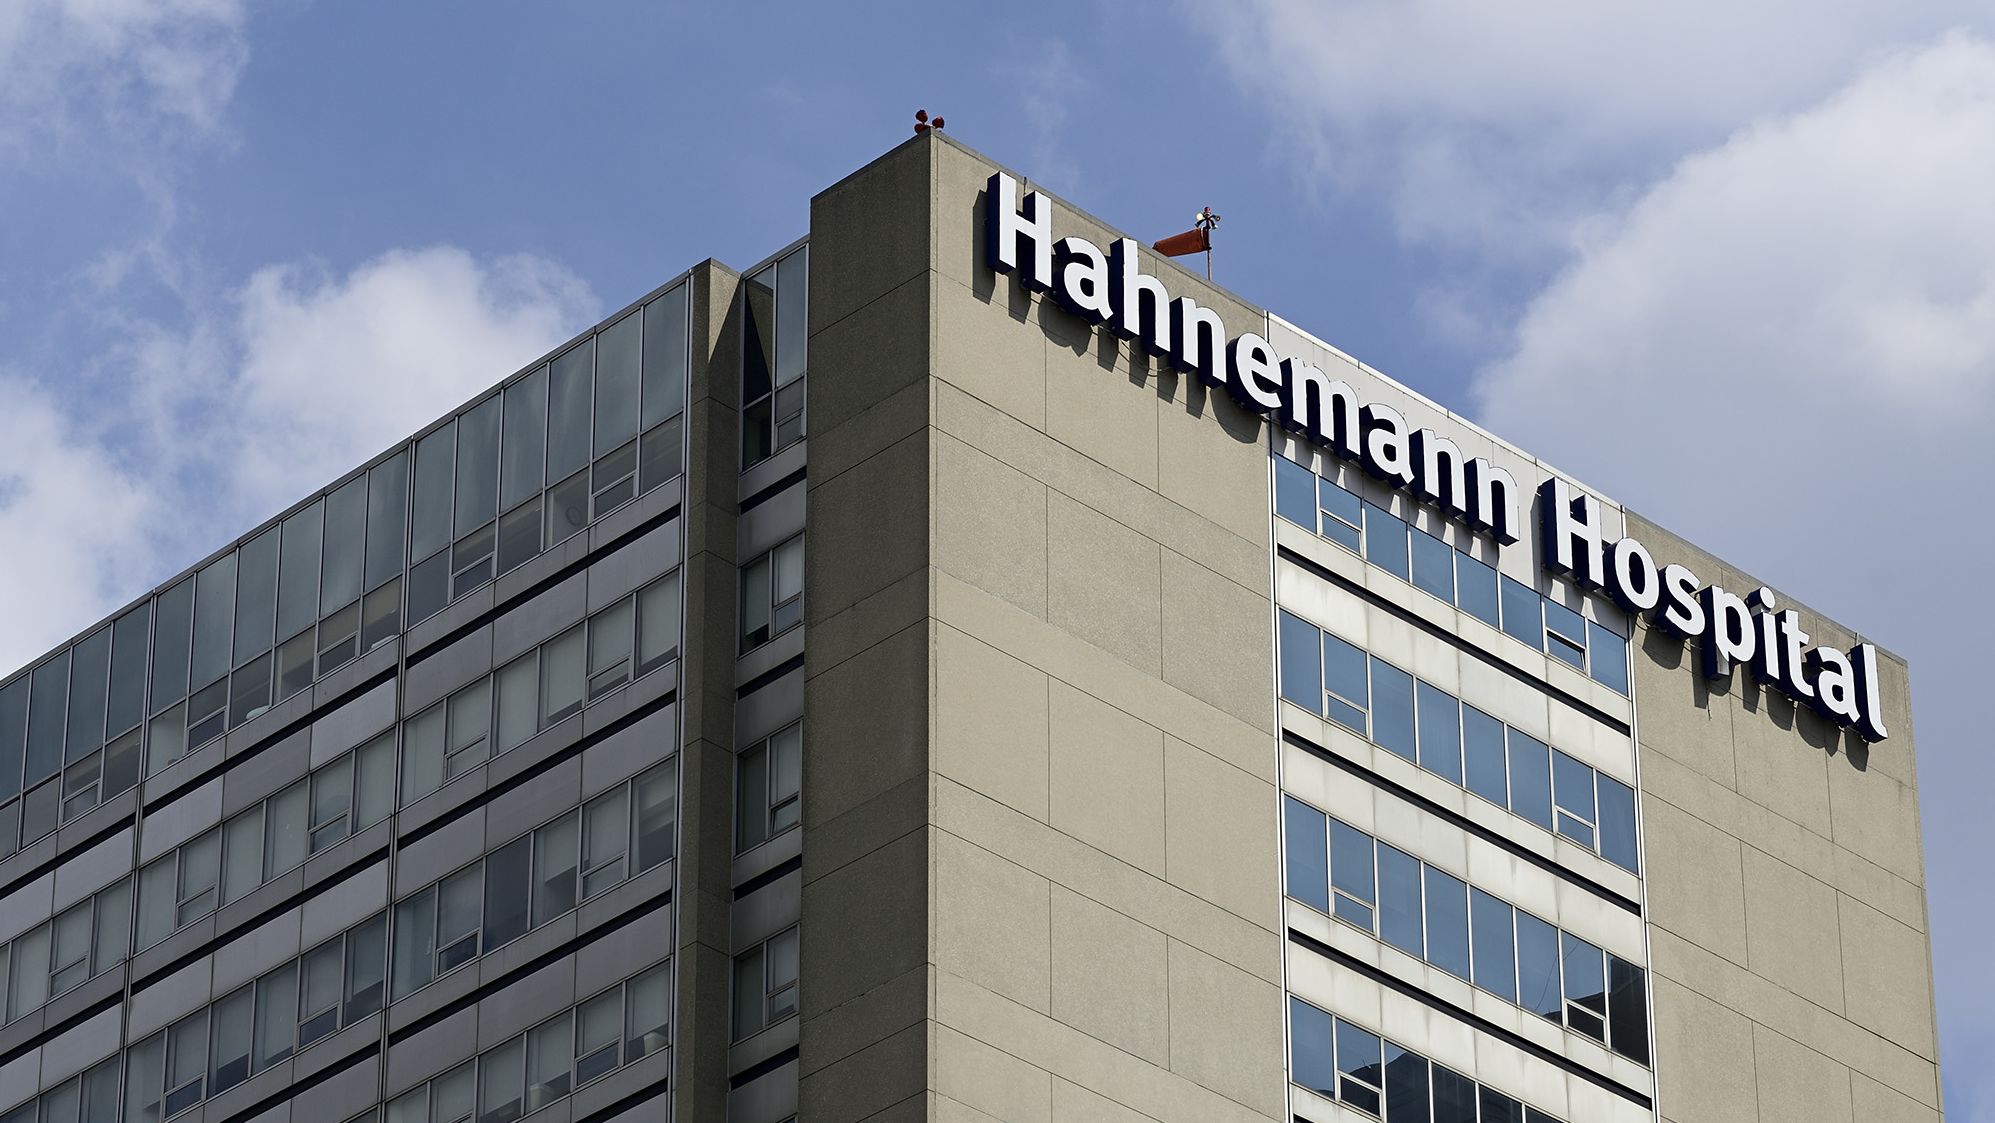 An exterior view of Hahnemann University Hospital in Philadelphia, July 10, 2019